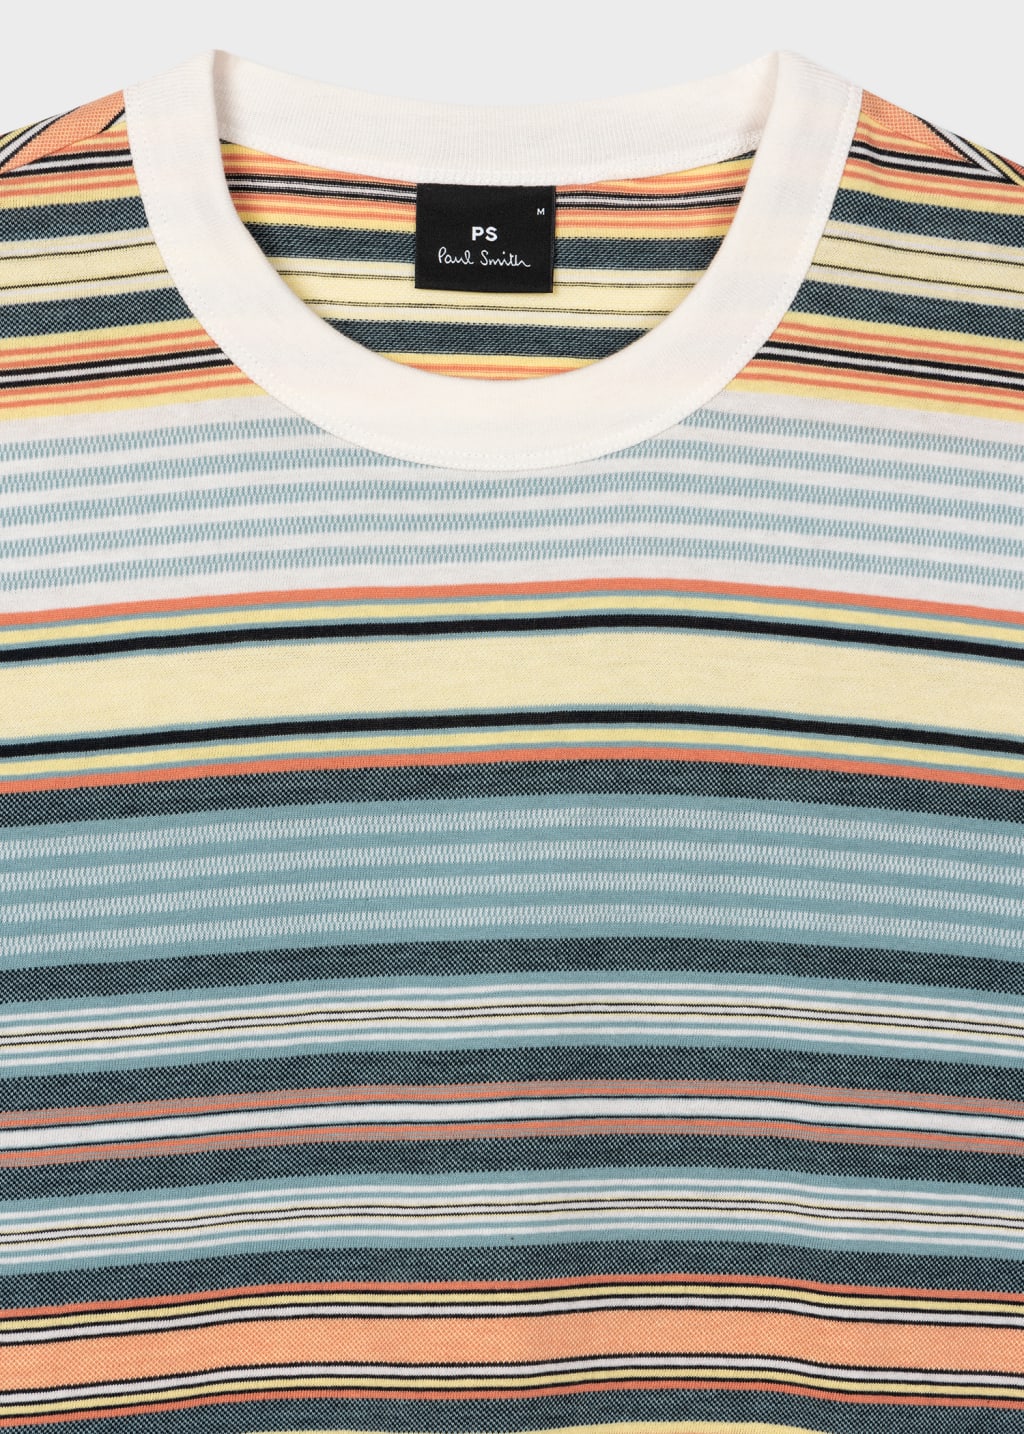 Detail View - Blue And Orange Multi-Stripe Cotton T-Shirt Paul Smith